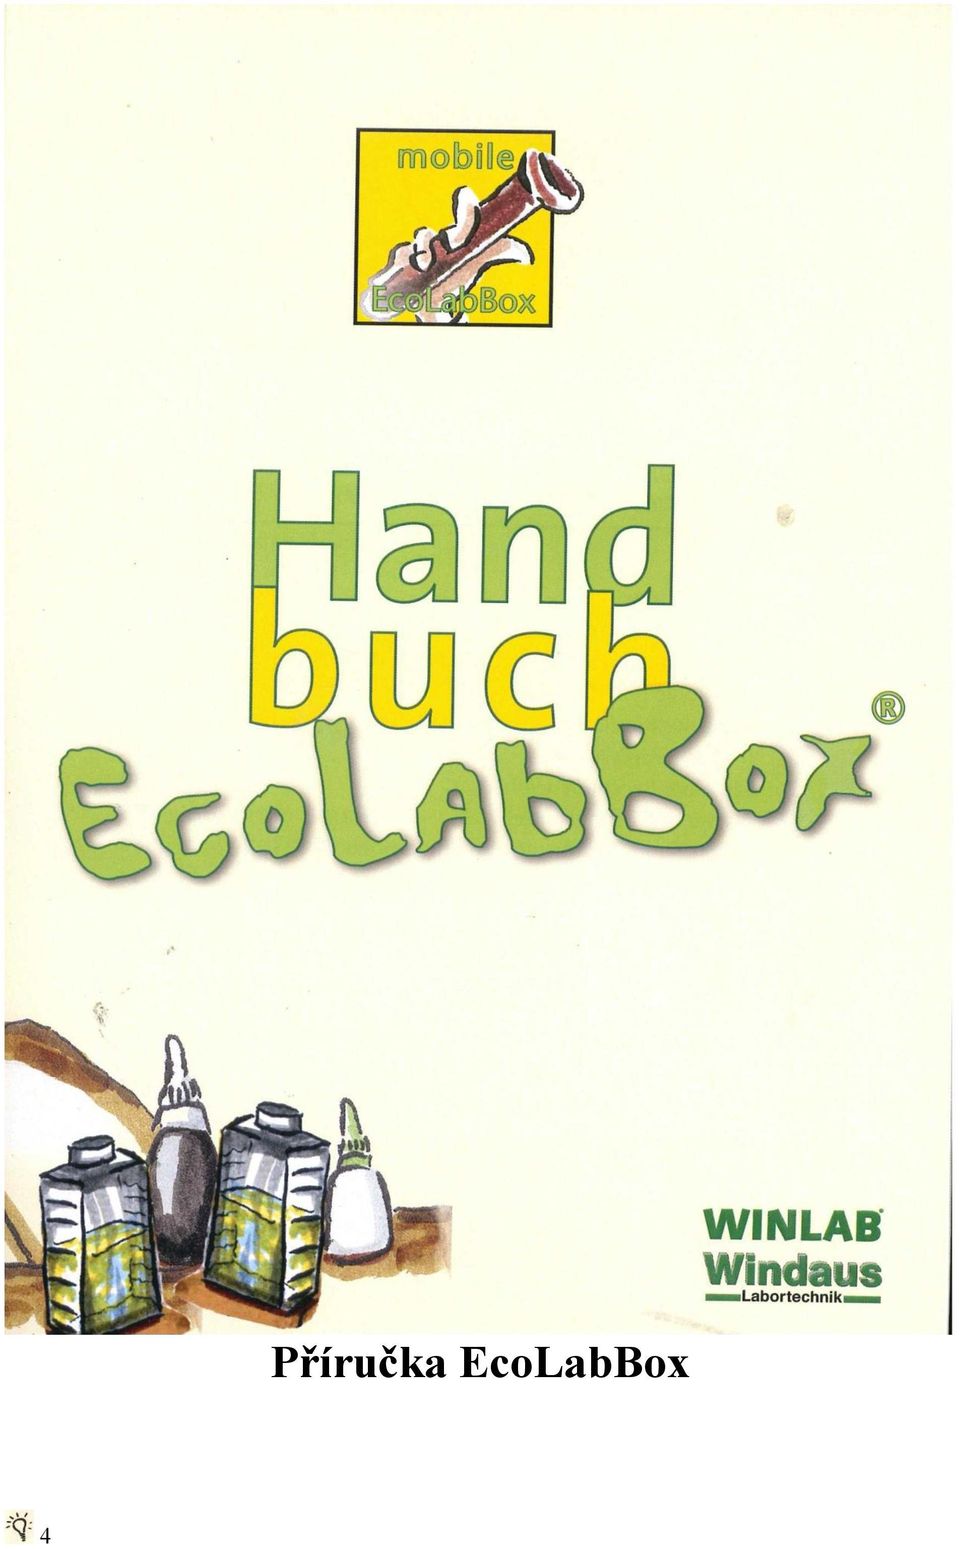 EcoLabBox